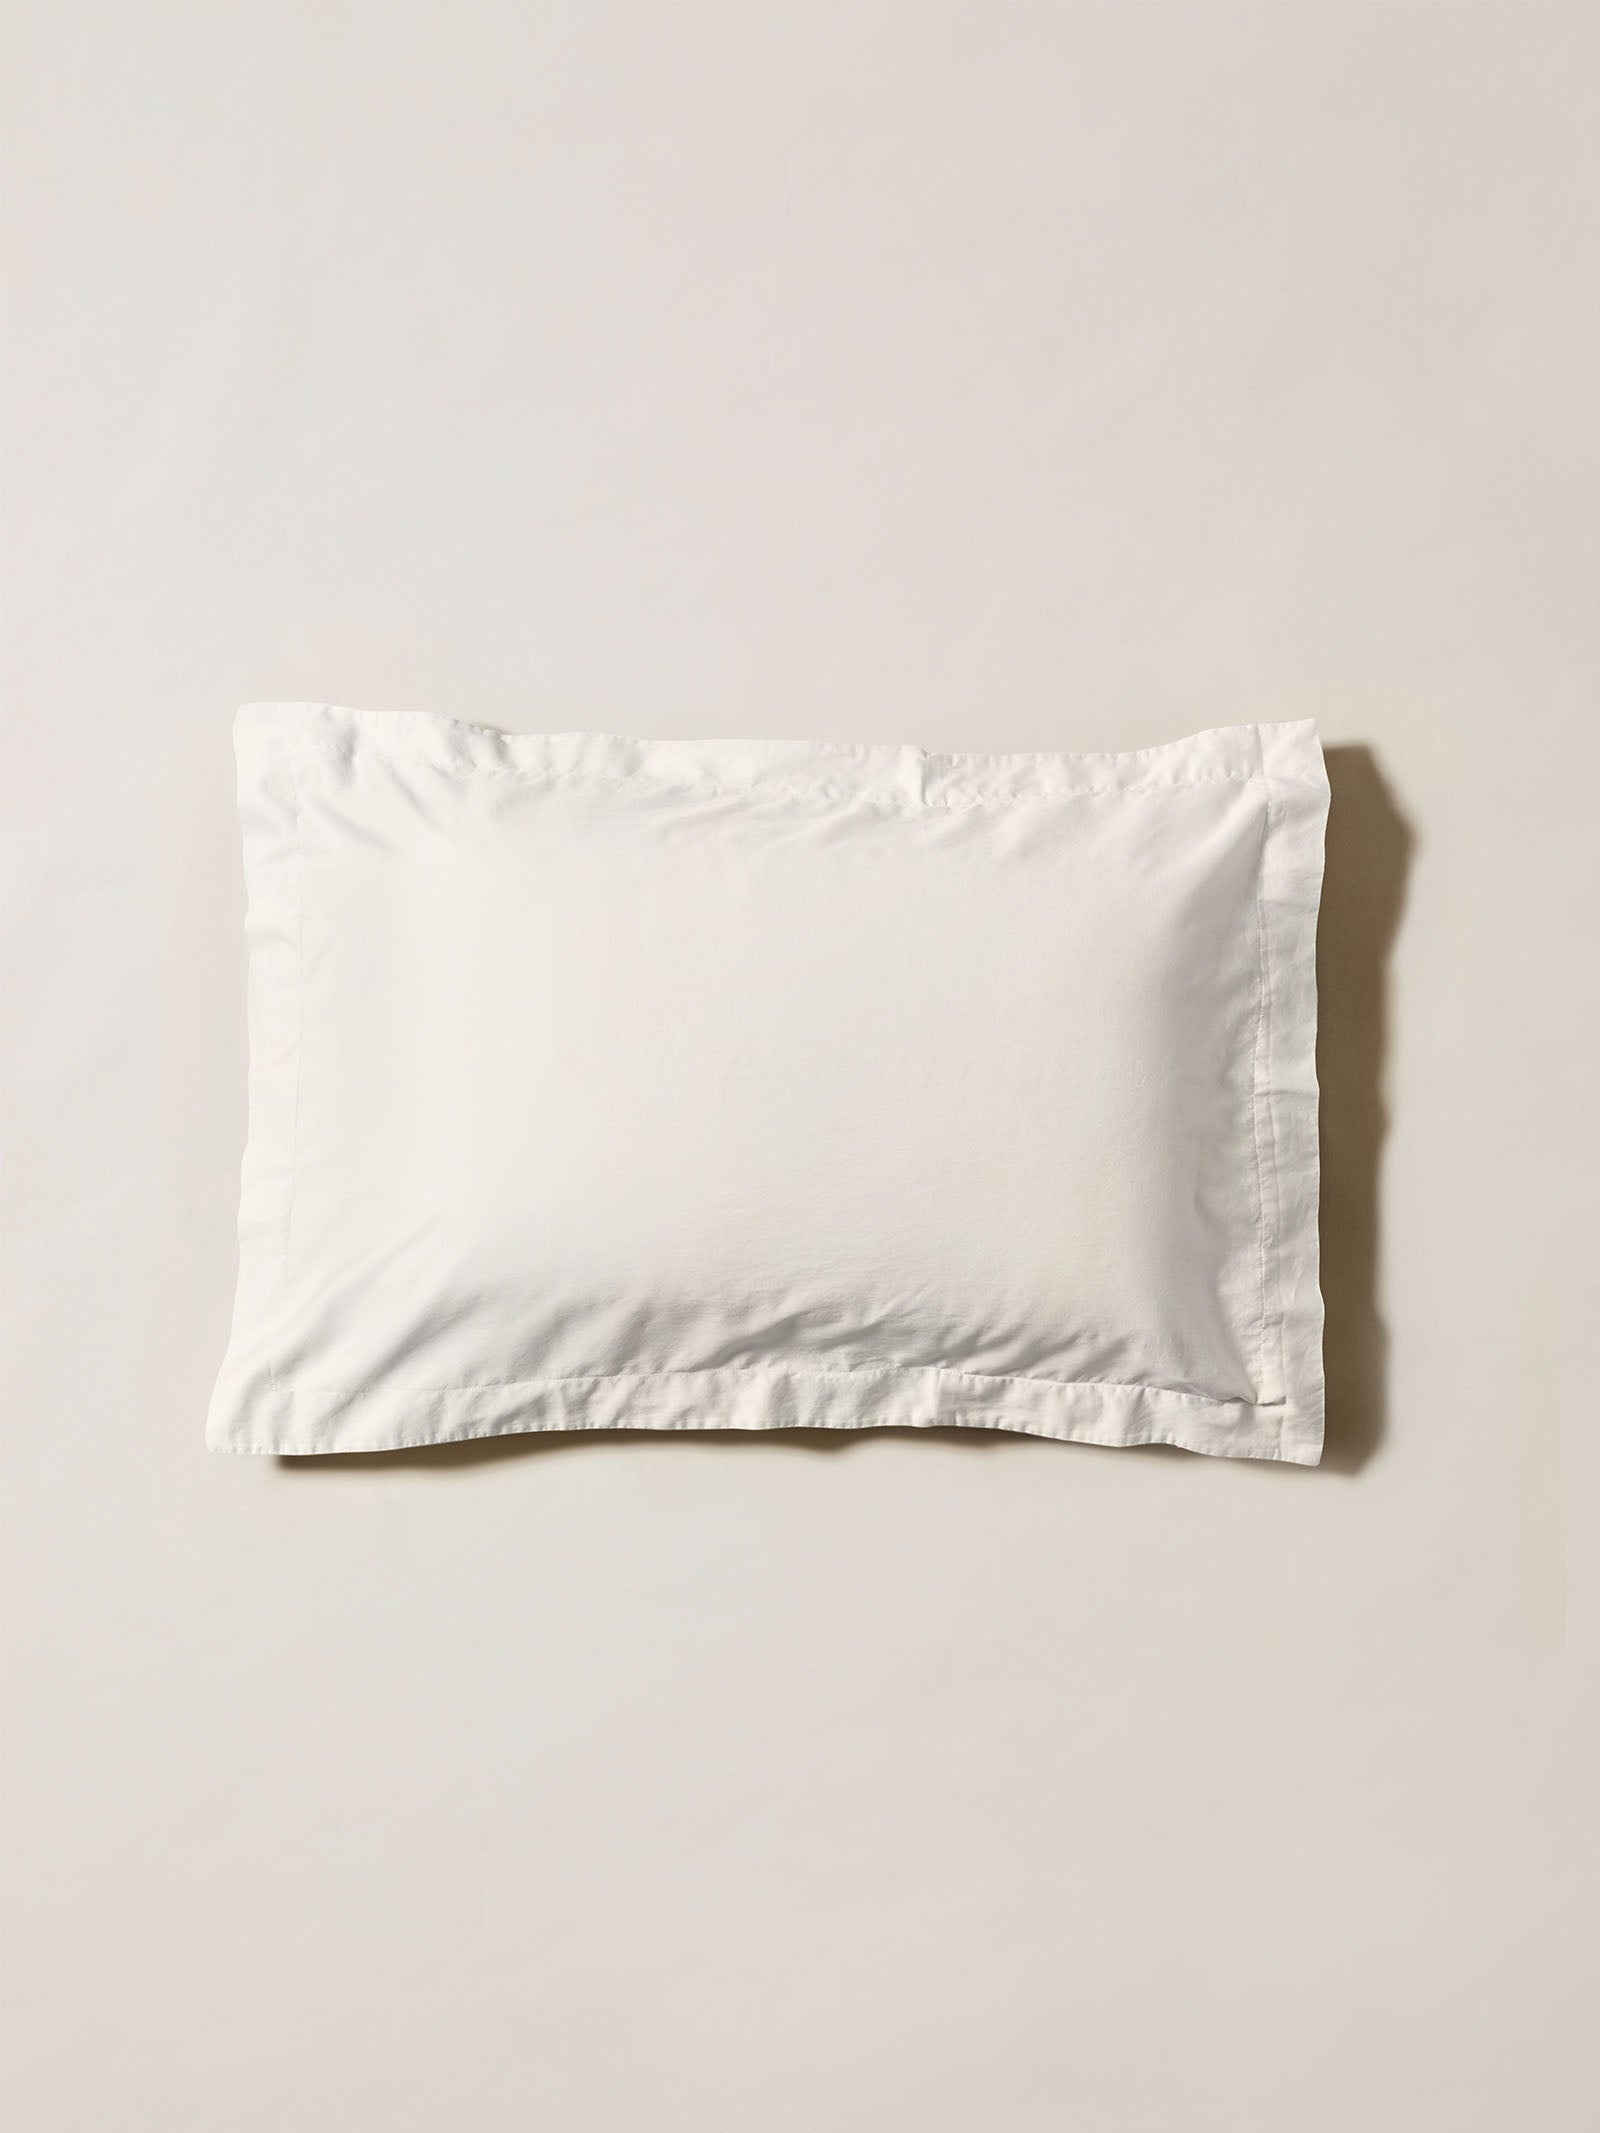 Superfine Cotton Sheets - Natural White